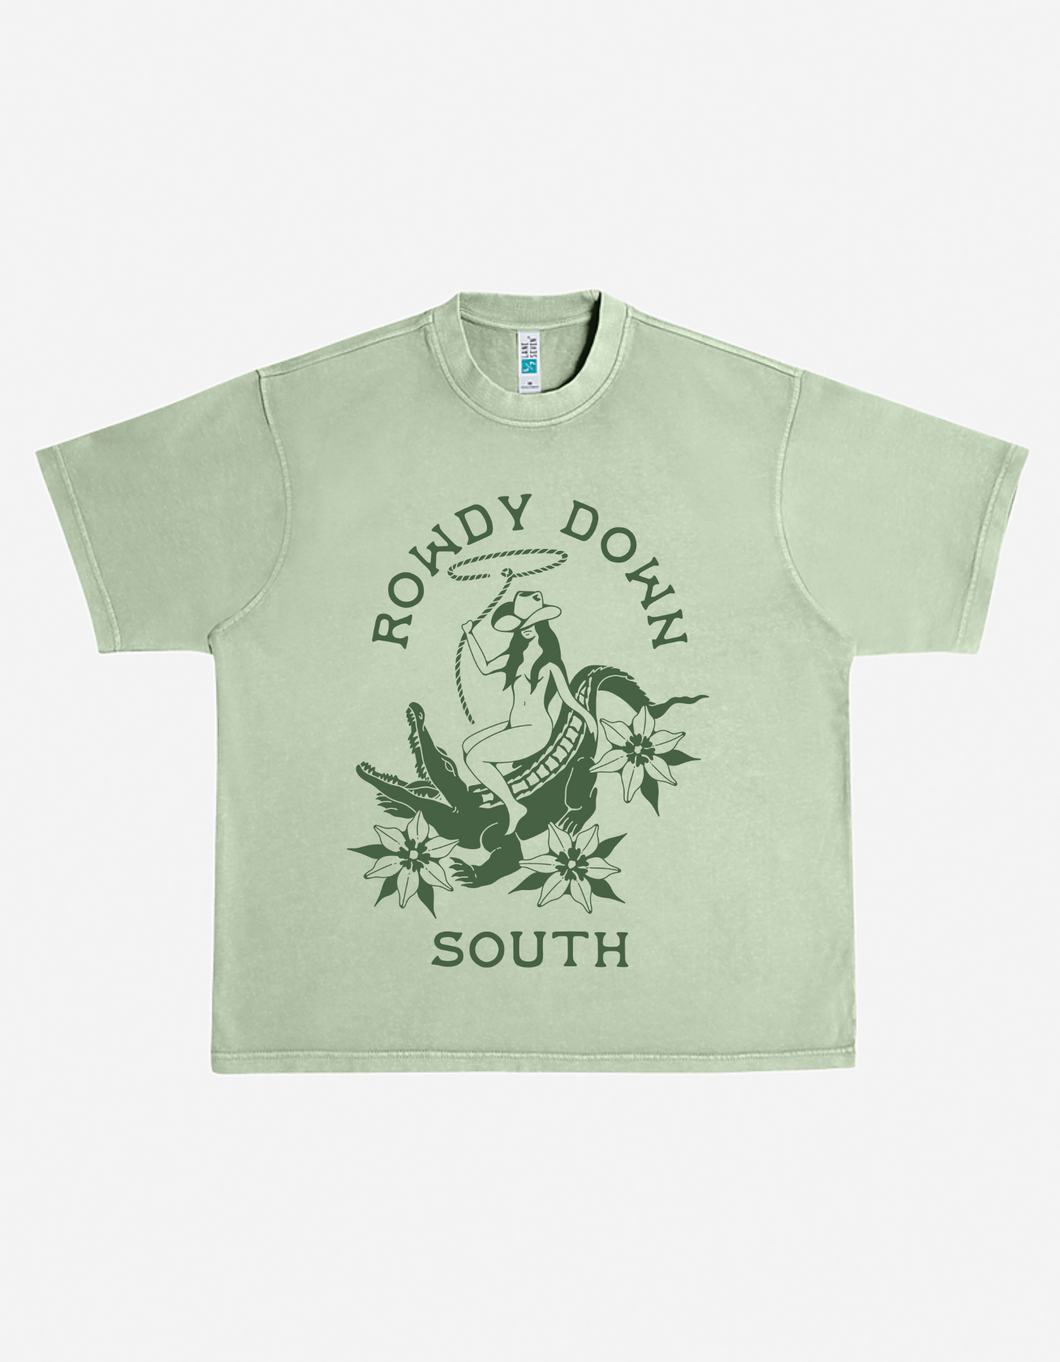 Rowdy Down South - Boxy